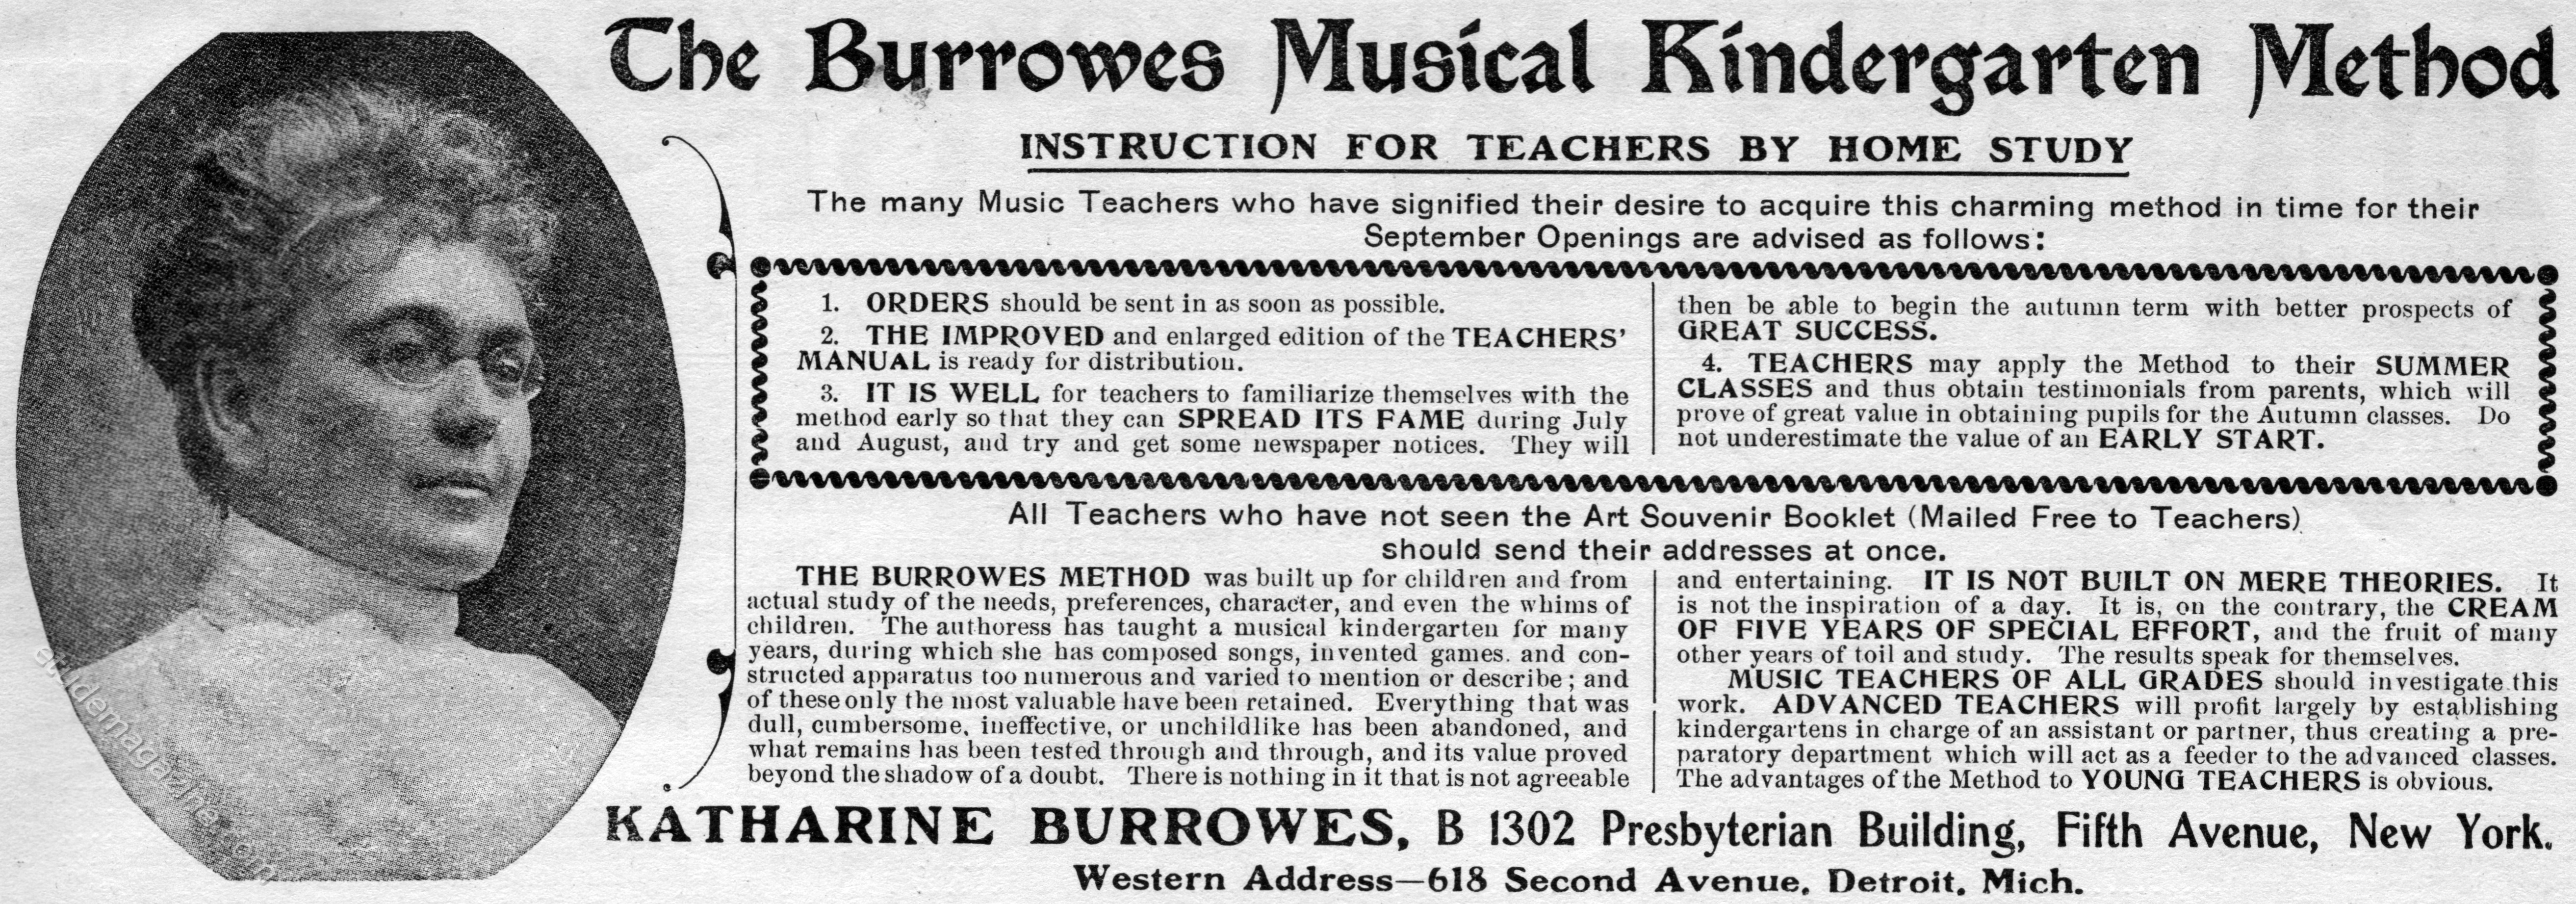 The Burrowes Musical Kindergarten Method